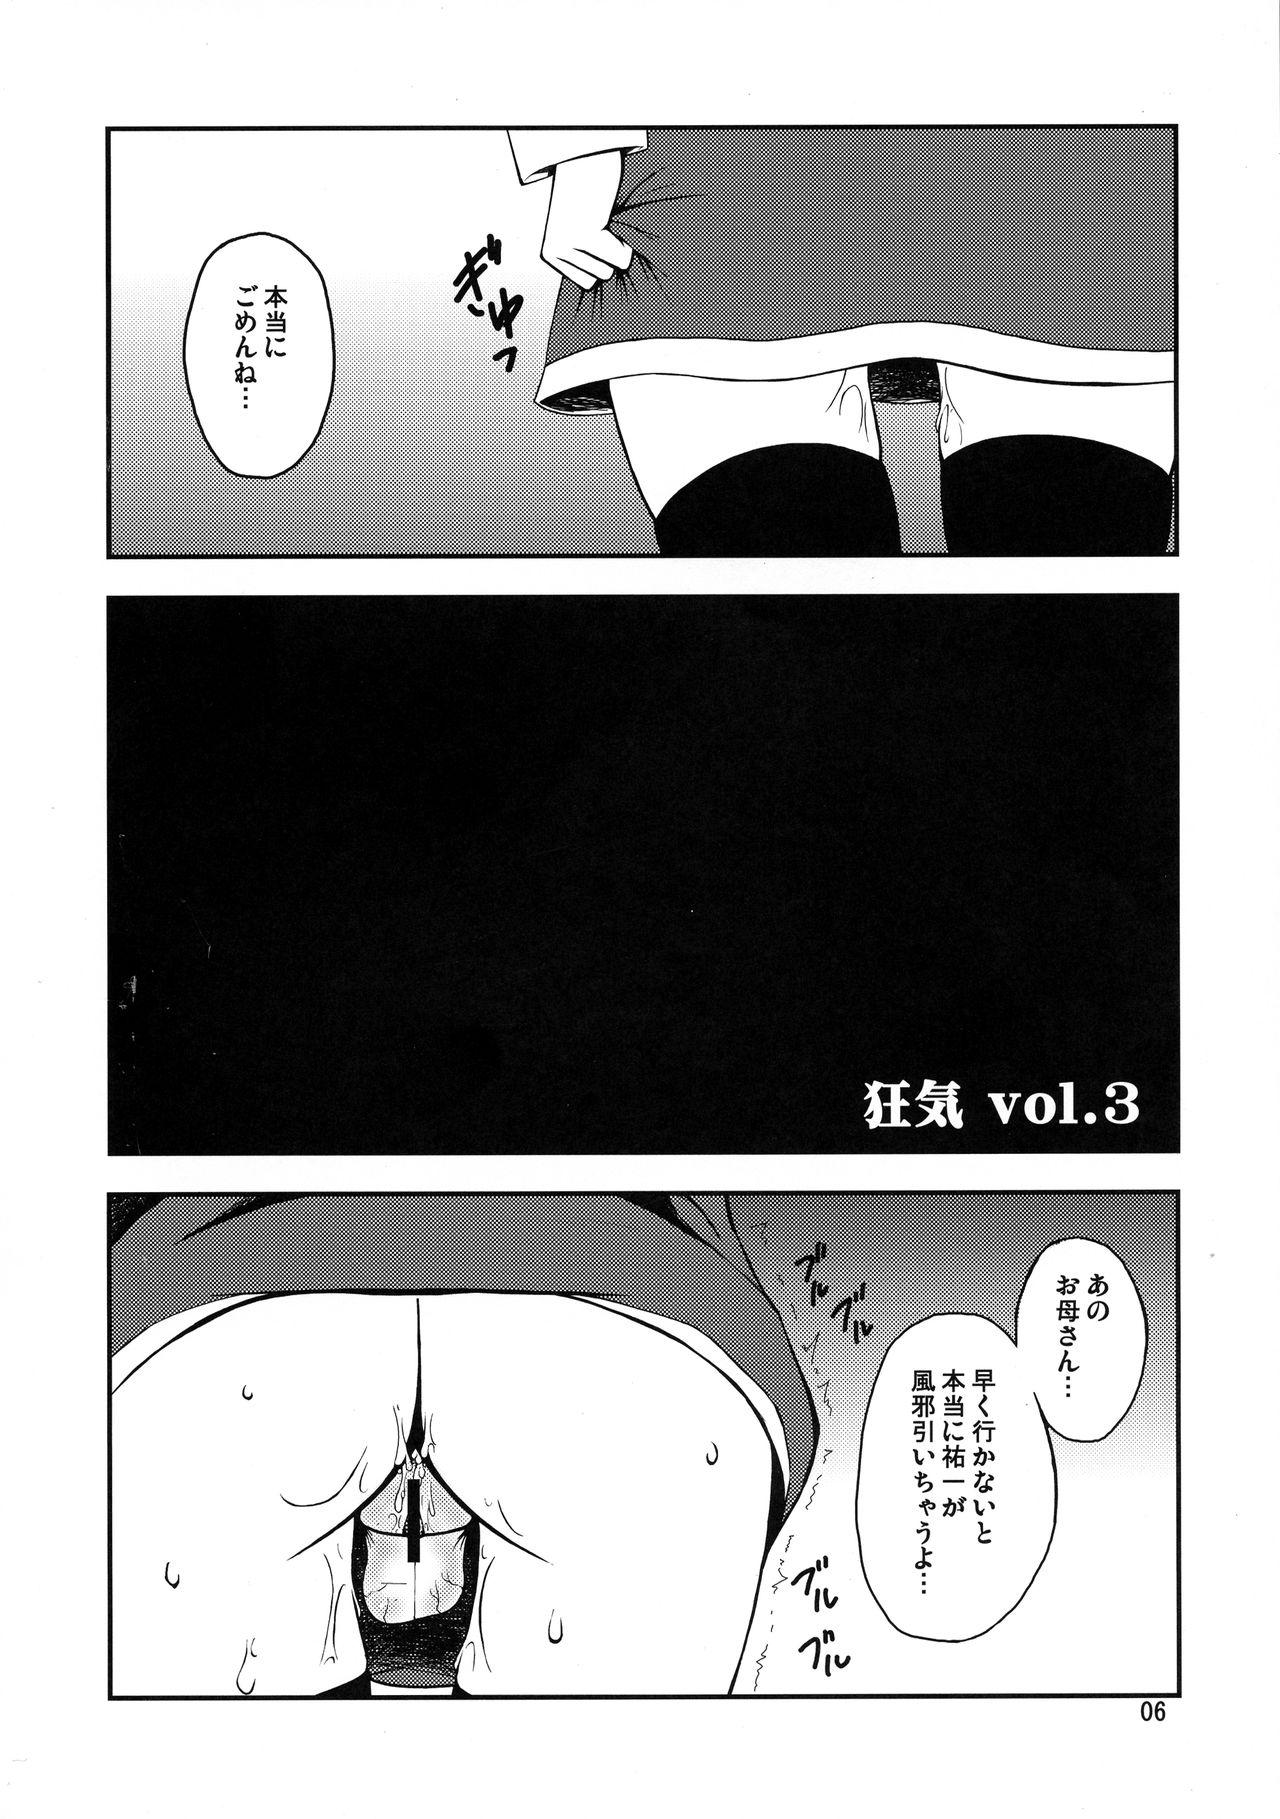 Animated Kyouki Vol. 3~5 Remake Ver. - Kanon Blows - Page 6